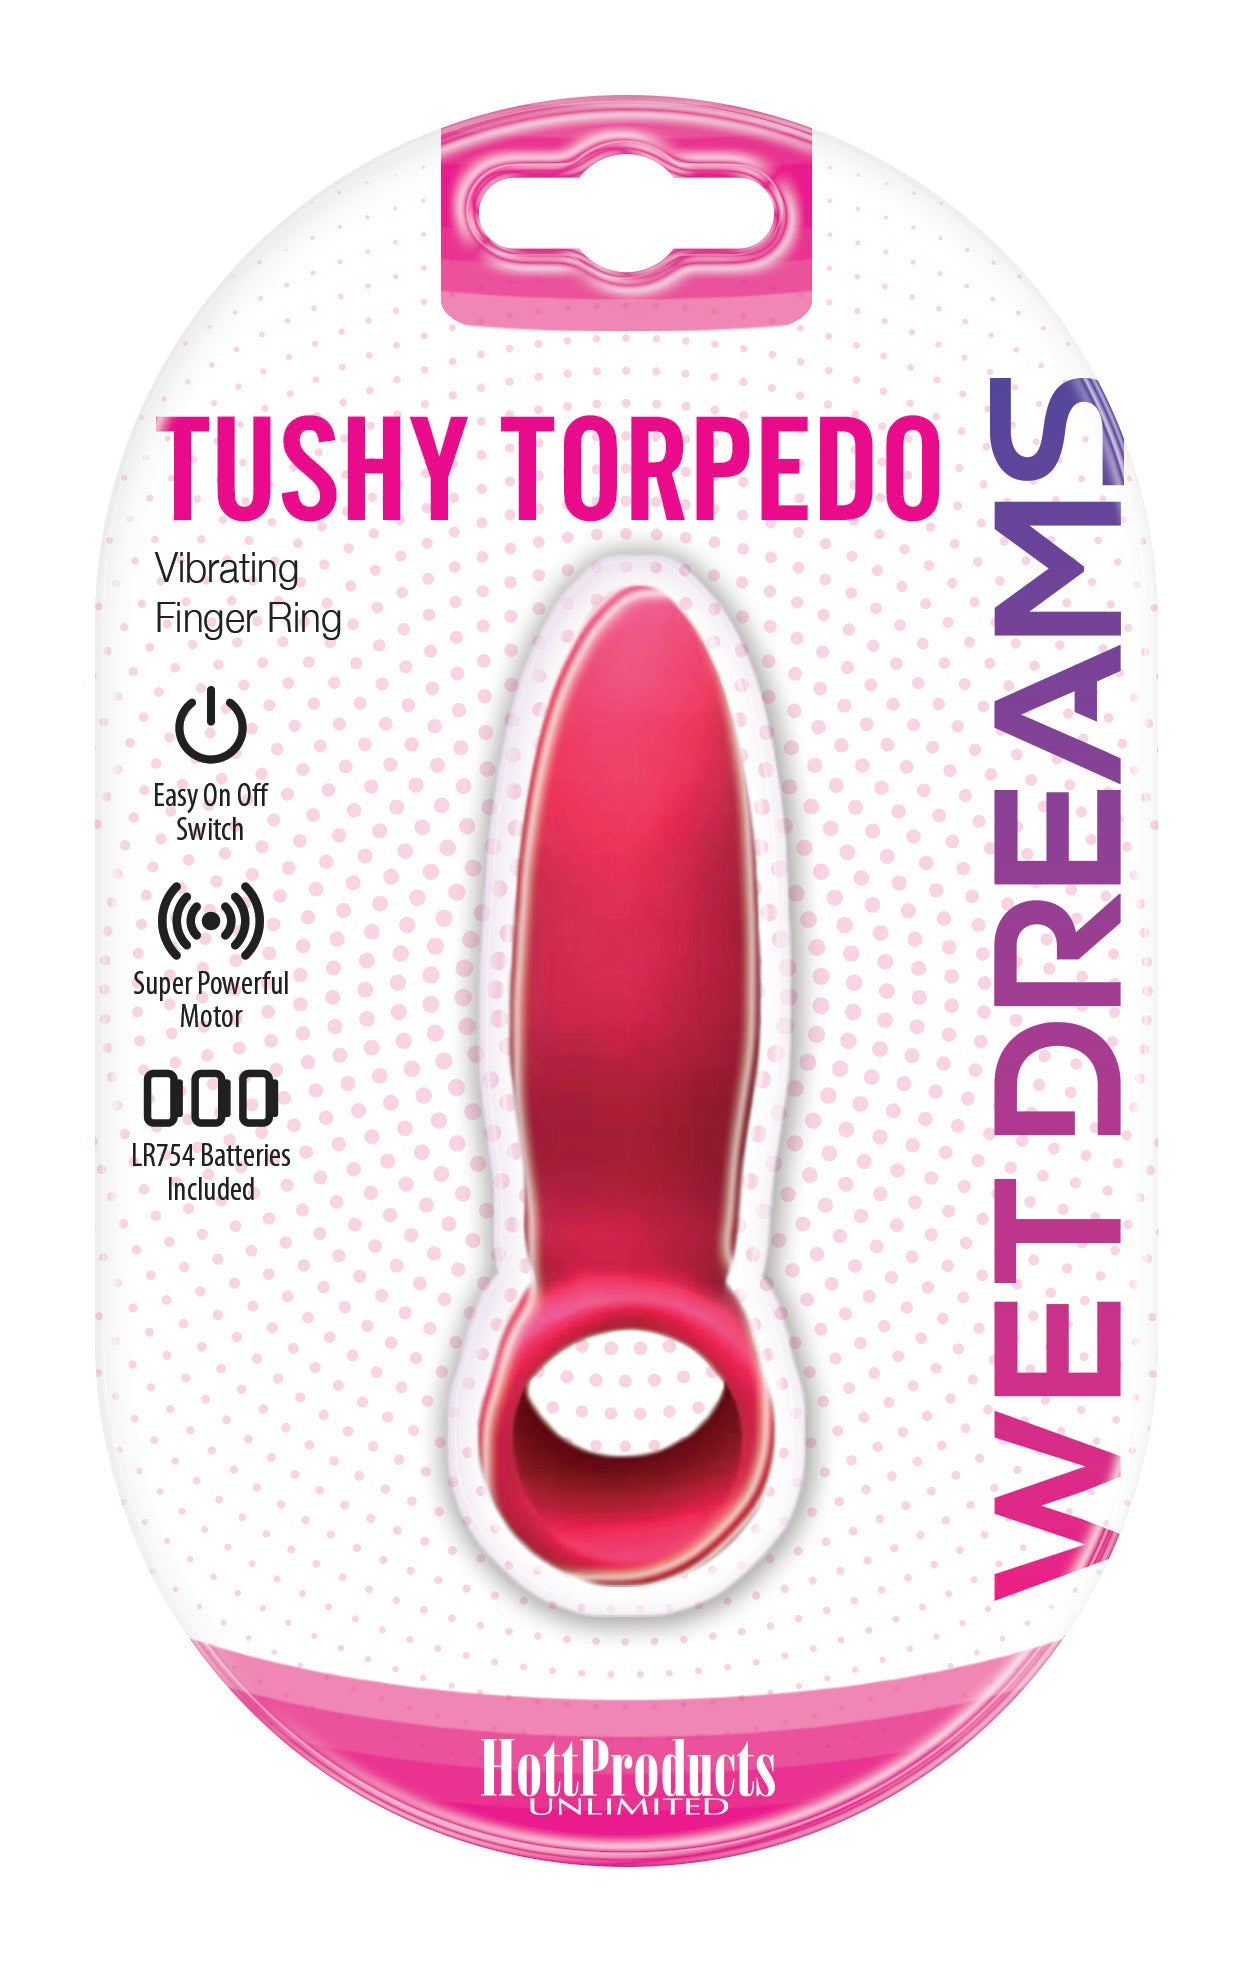 Wet Dreams Tushy Torpedo Finger Ring With Turbo Motor - Pink HTP3269